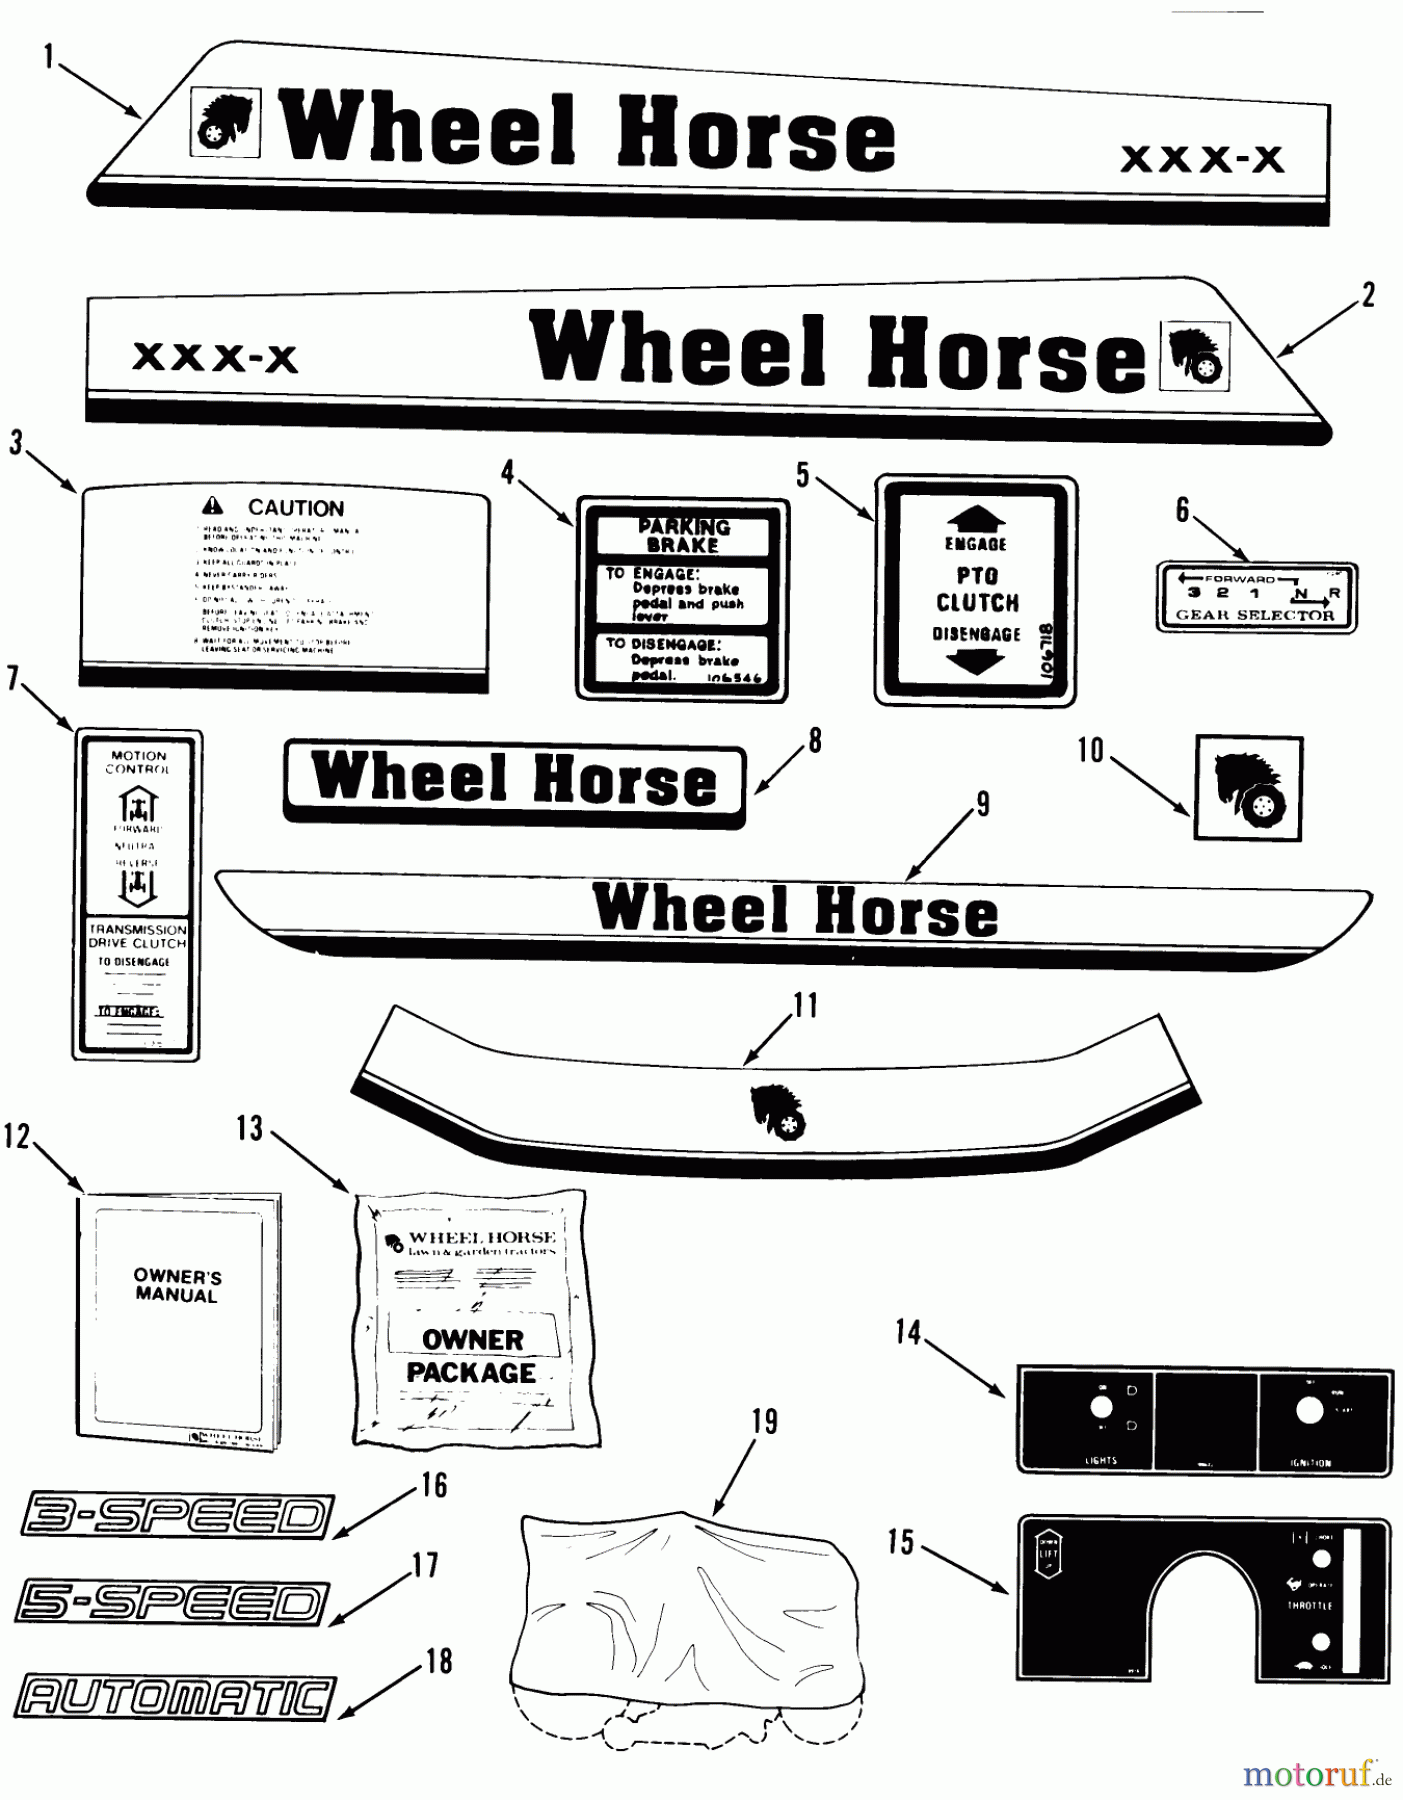  Toro Neu Mowers, Lawn & Garden Tractor Seite 1 22-11B301 (211-3) - Toro 211-3 Tractor, 1985 DECALS, MISCELLANEOUS